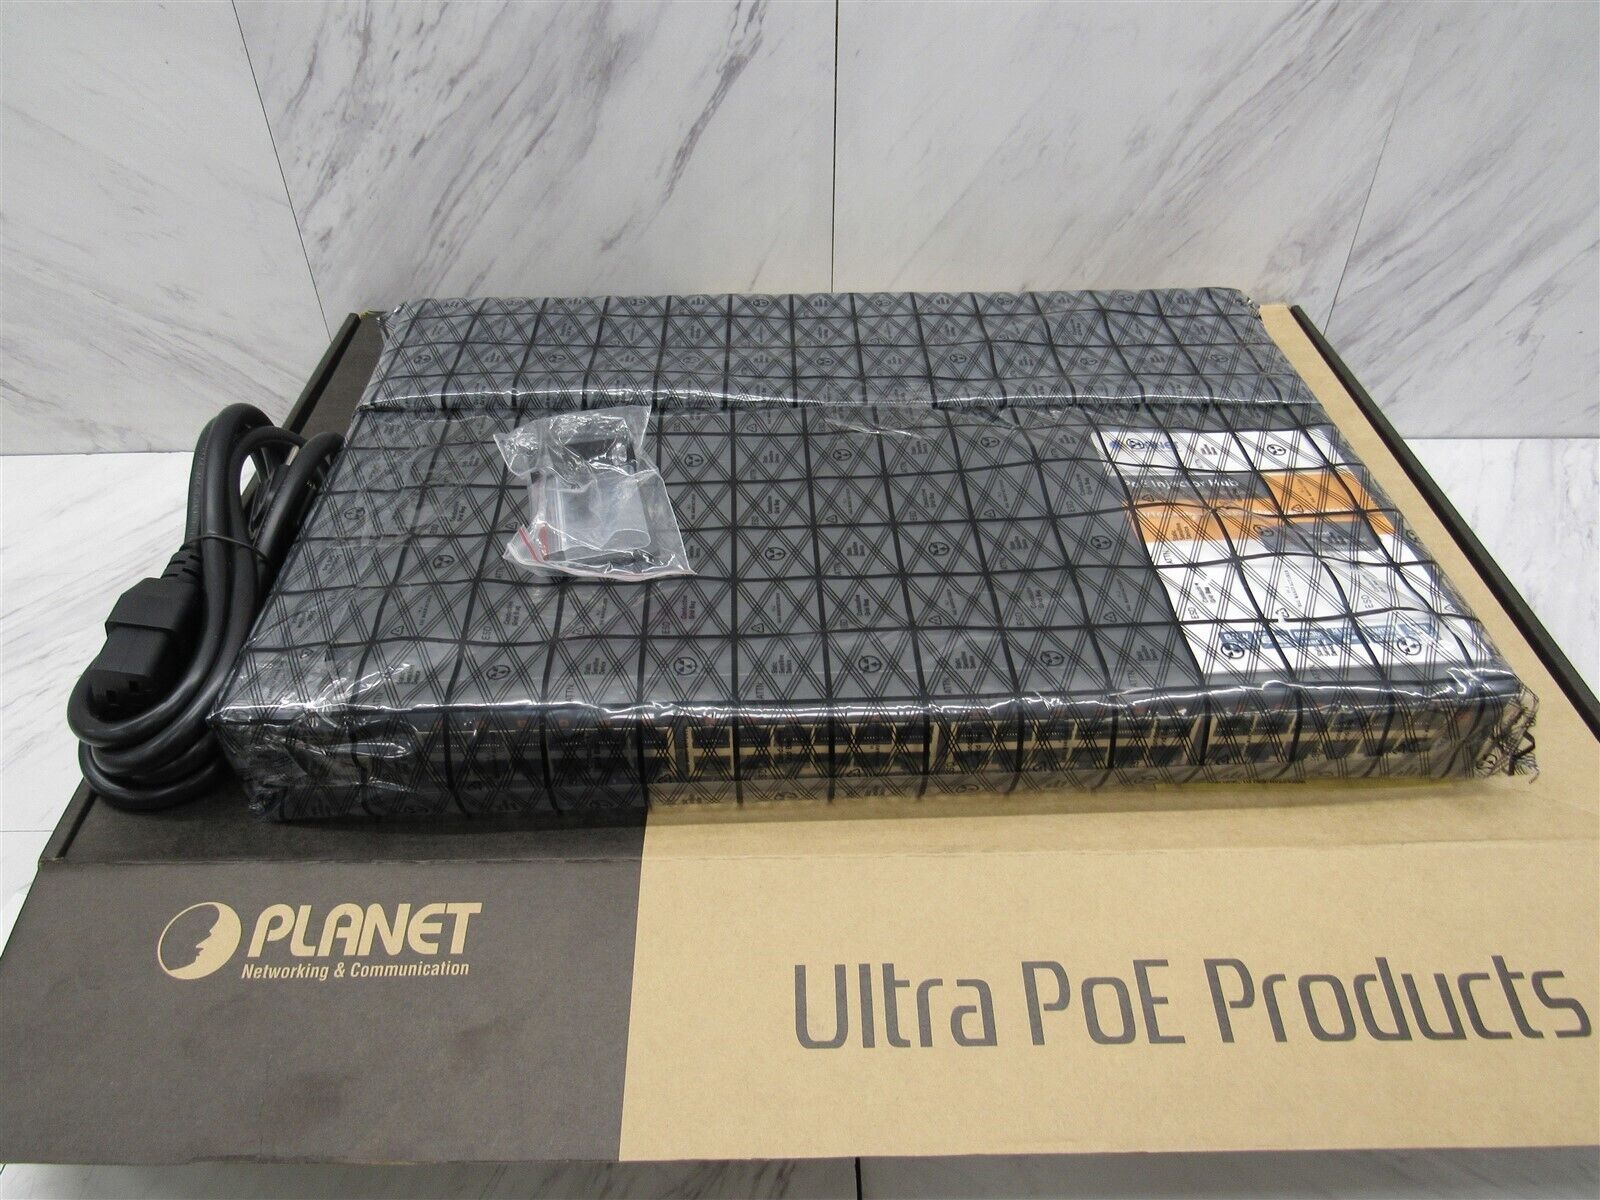 NEW PLANET UPOE-2400G 24-Port Ethernet CAT5 CAT6 PoE++ Injector Hub